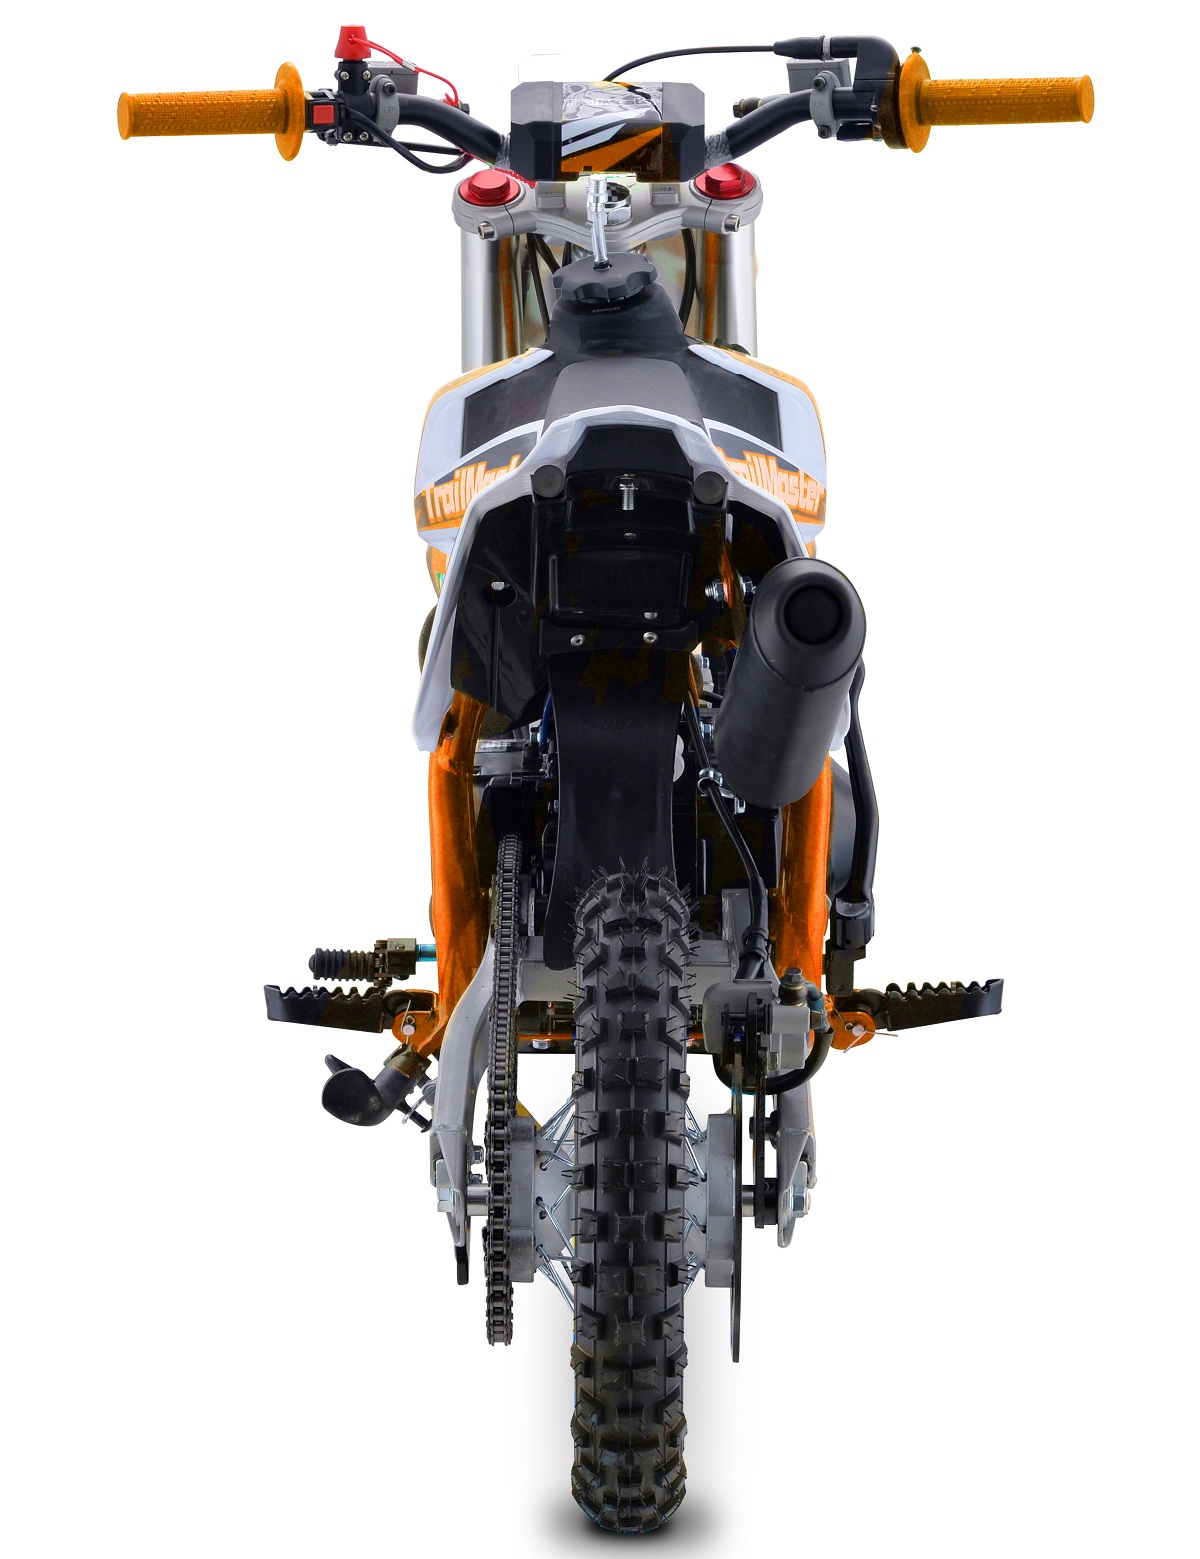 Trailmaster TM15 110cc Dirt Bike